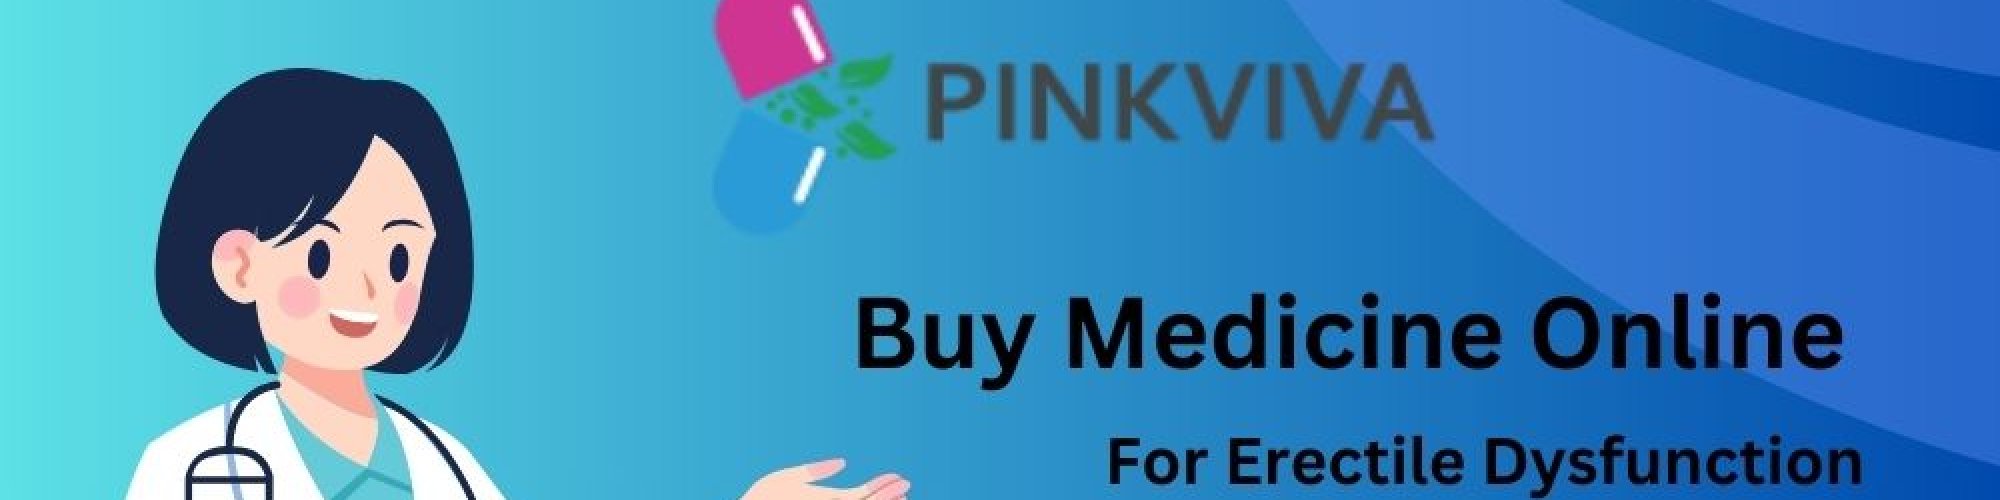 Buy Cenforce 150mg Tablets online@ Pinkviva {{Kanas, USA}}